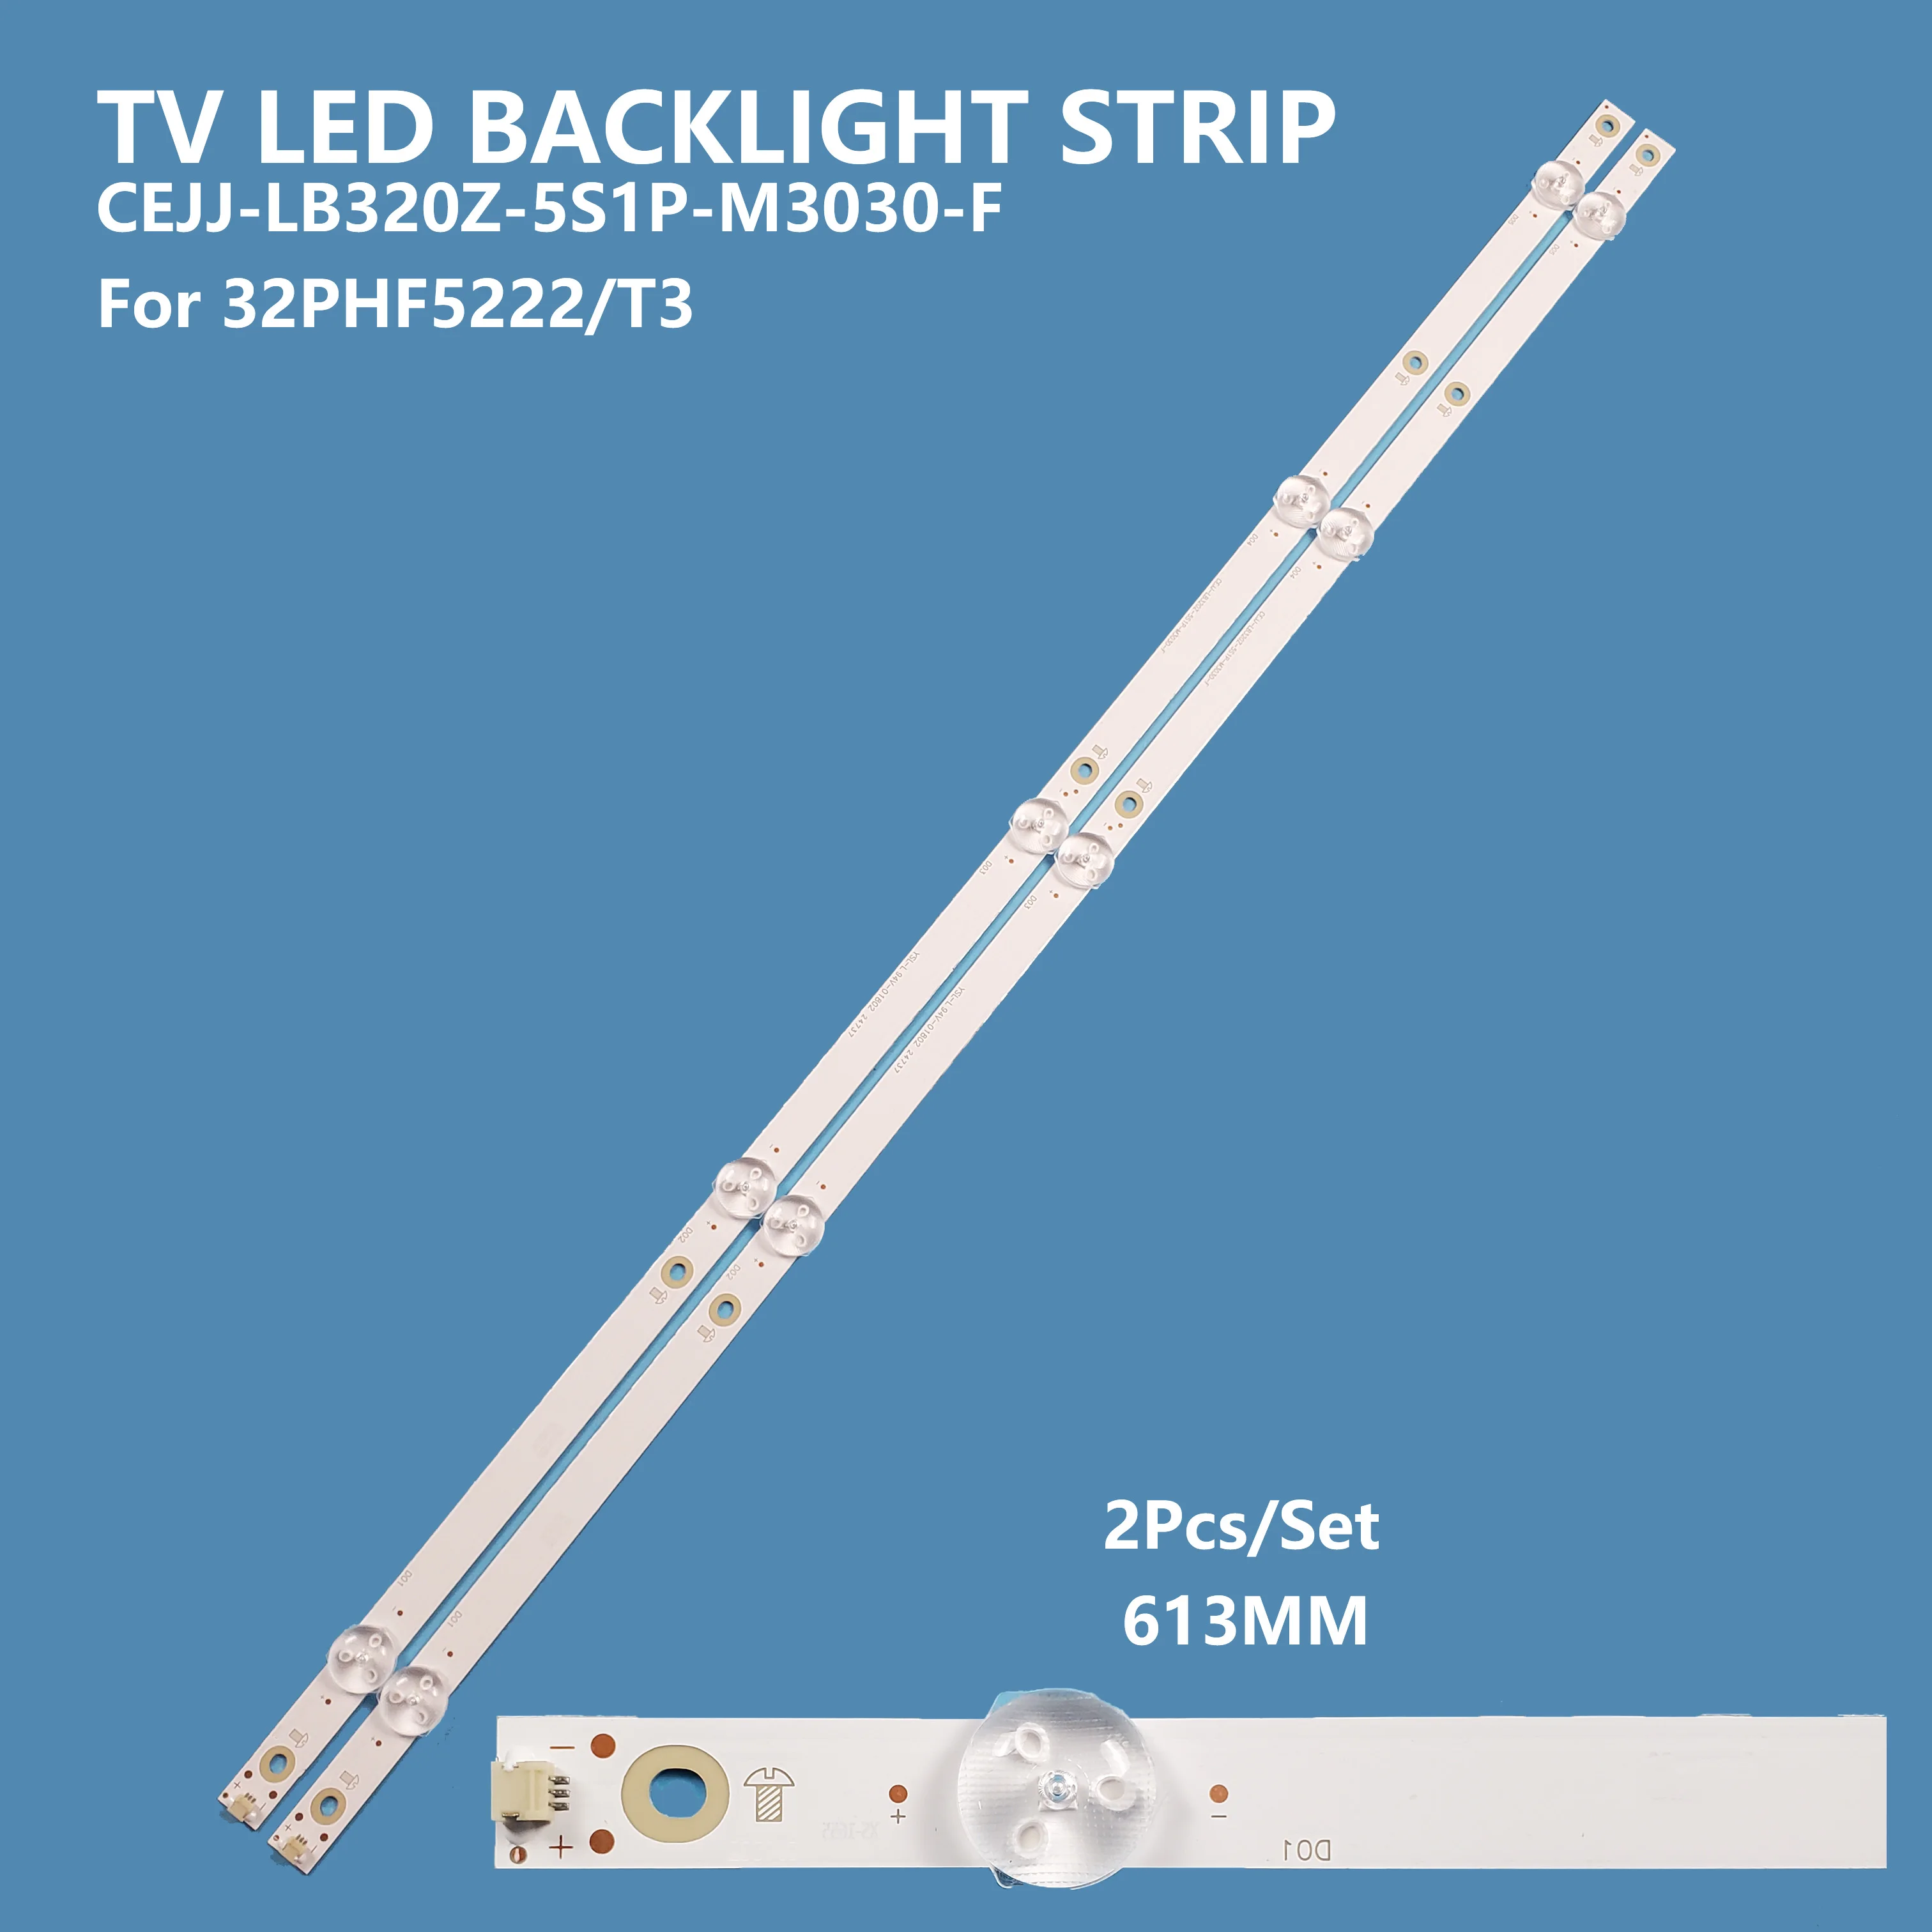 2PCS/set New Arrival TV Led Backlight Strip CEJJ-LB320Z-5S1P-M3030-F For PHILIPS 32inch 32PHF5222/T3 tv Bar Light Accessories 2pcs set tv led backlight bar light strip hd315s1h81 t0 2x5 15 apt 32lb02 for hisense 32inch hz32e35a 32v1a j hz32e350a repair